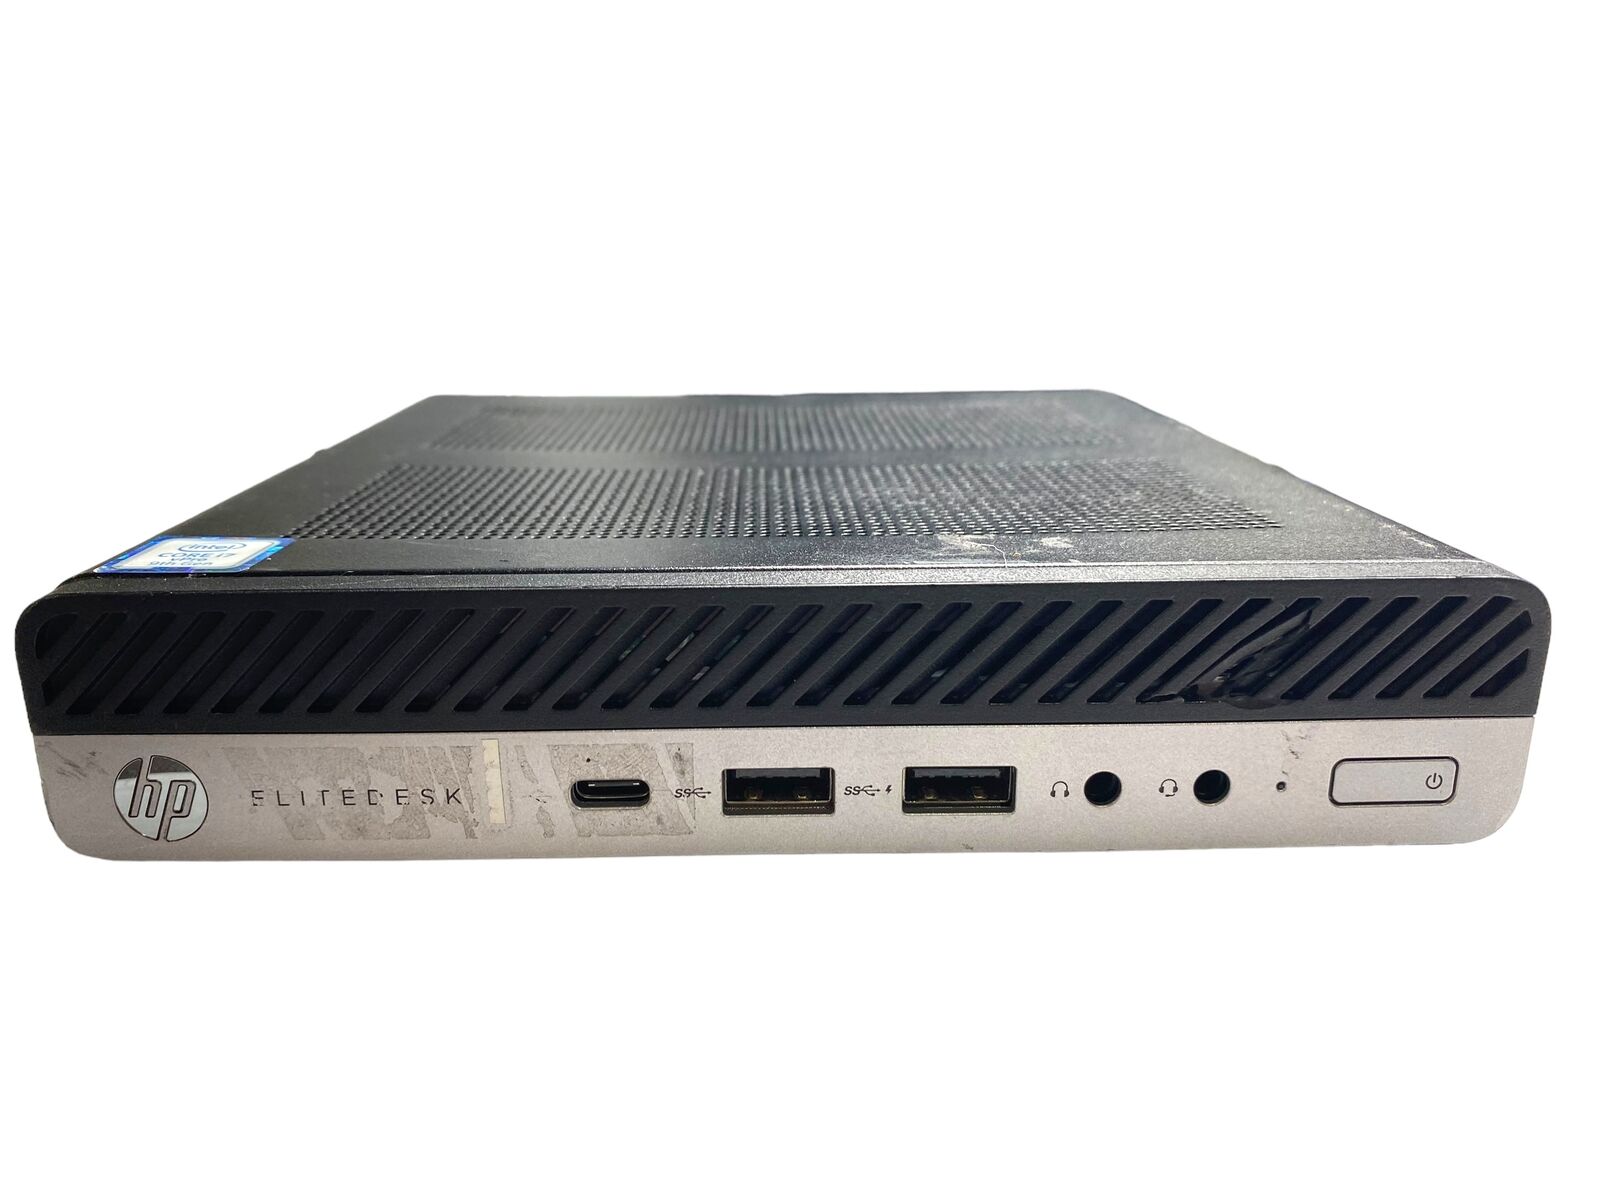 HP EliteDesk 800 G4 I7-8700 3.20GHz 256GB SSD 16GB RAM Desktop